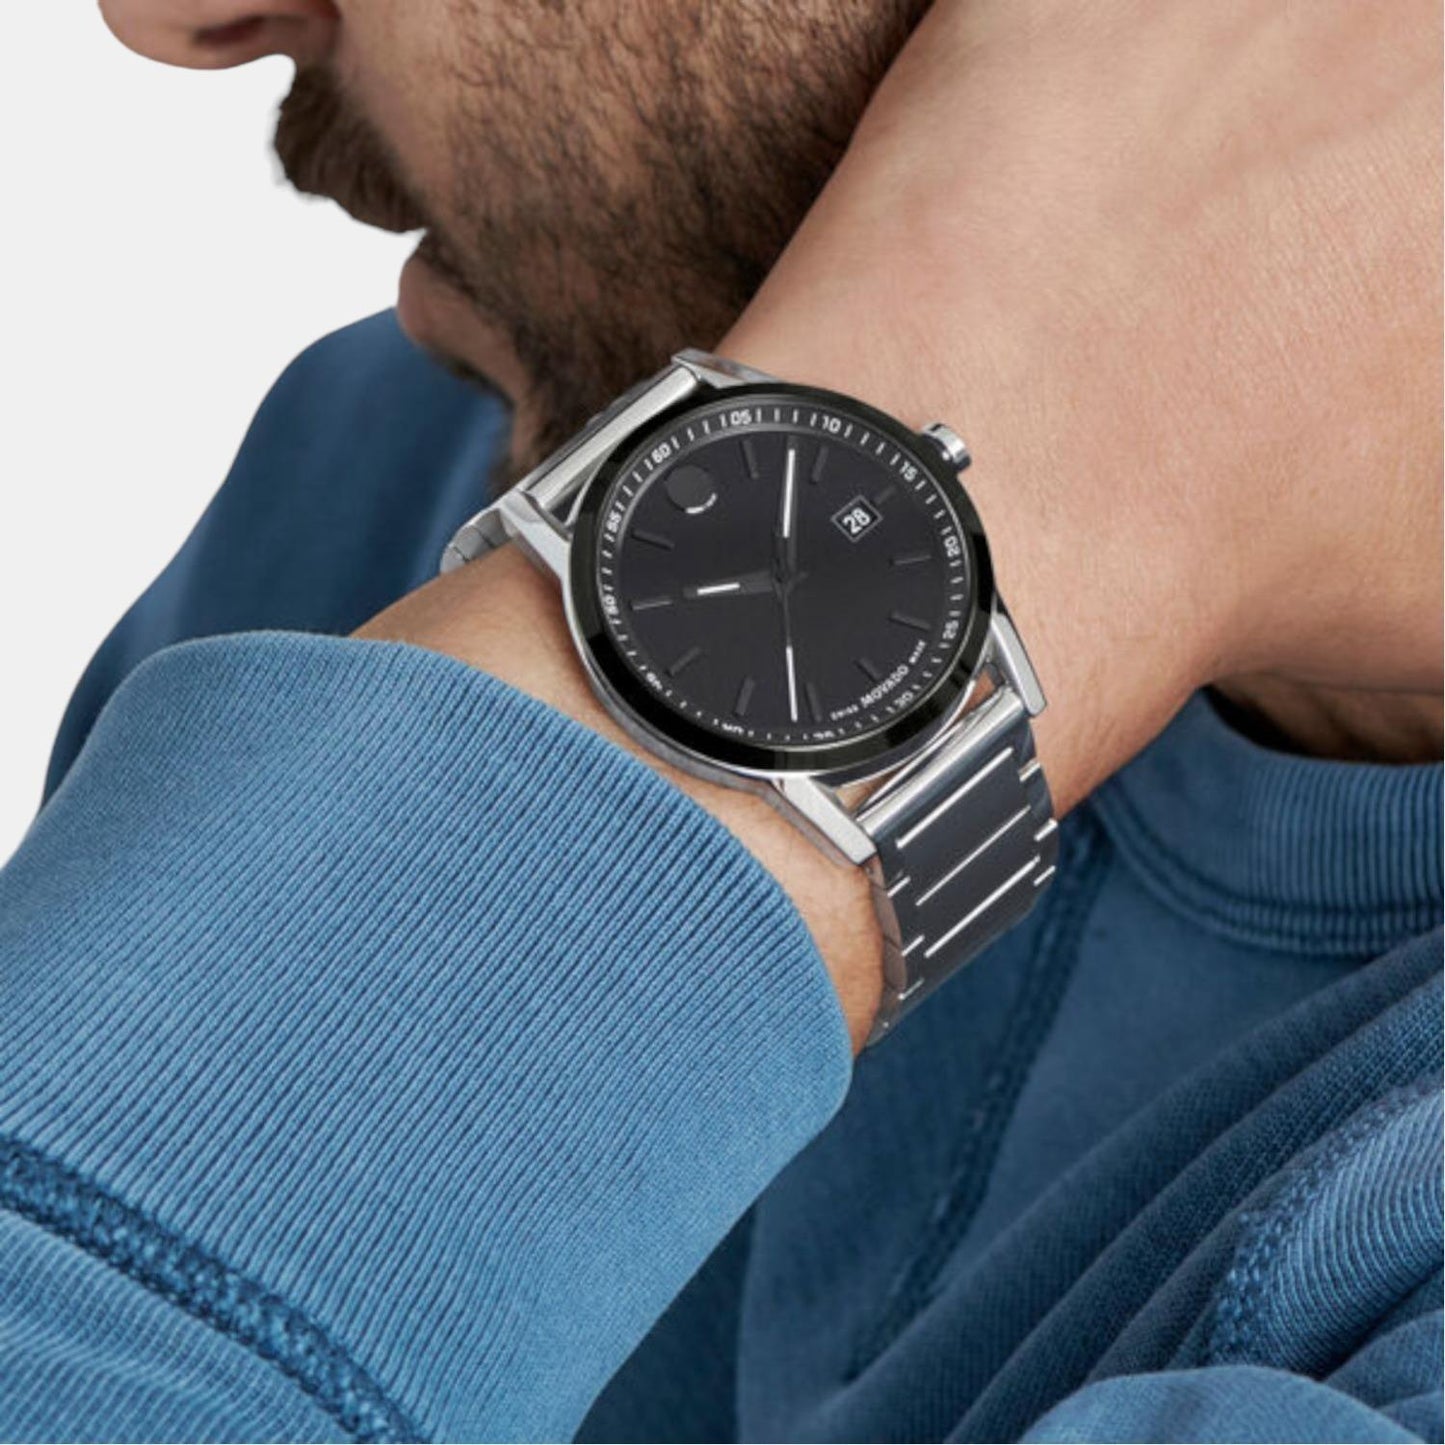 movado-stainless-steel-black-analog-men-watch-607557